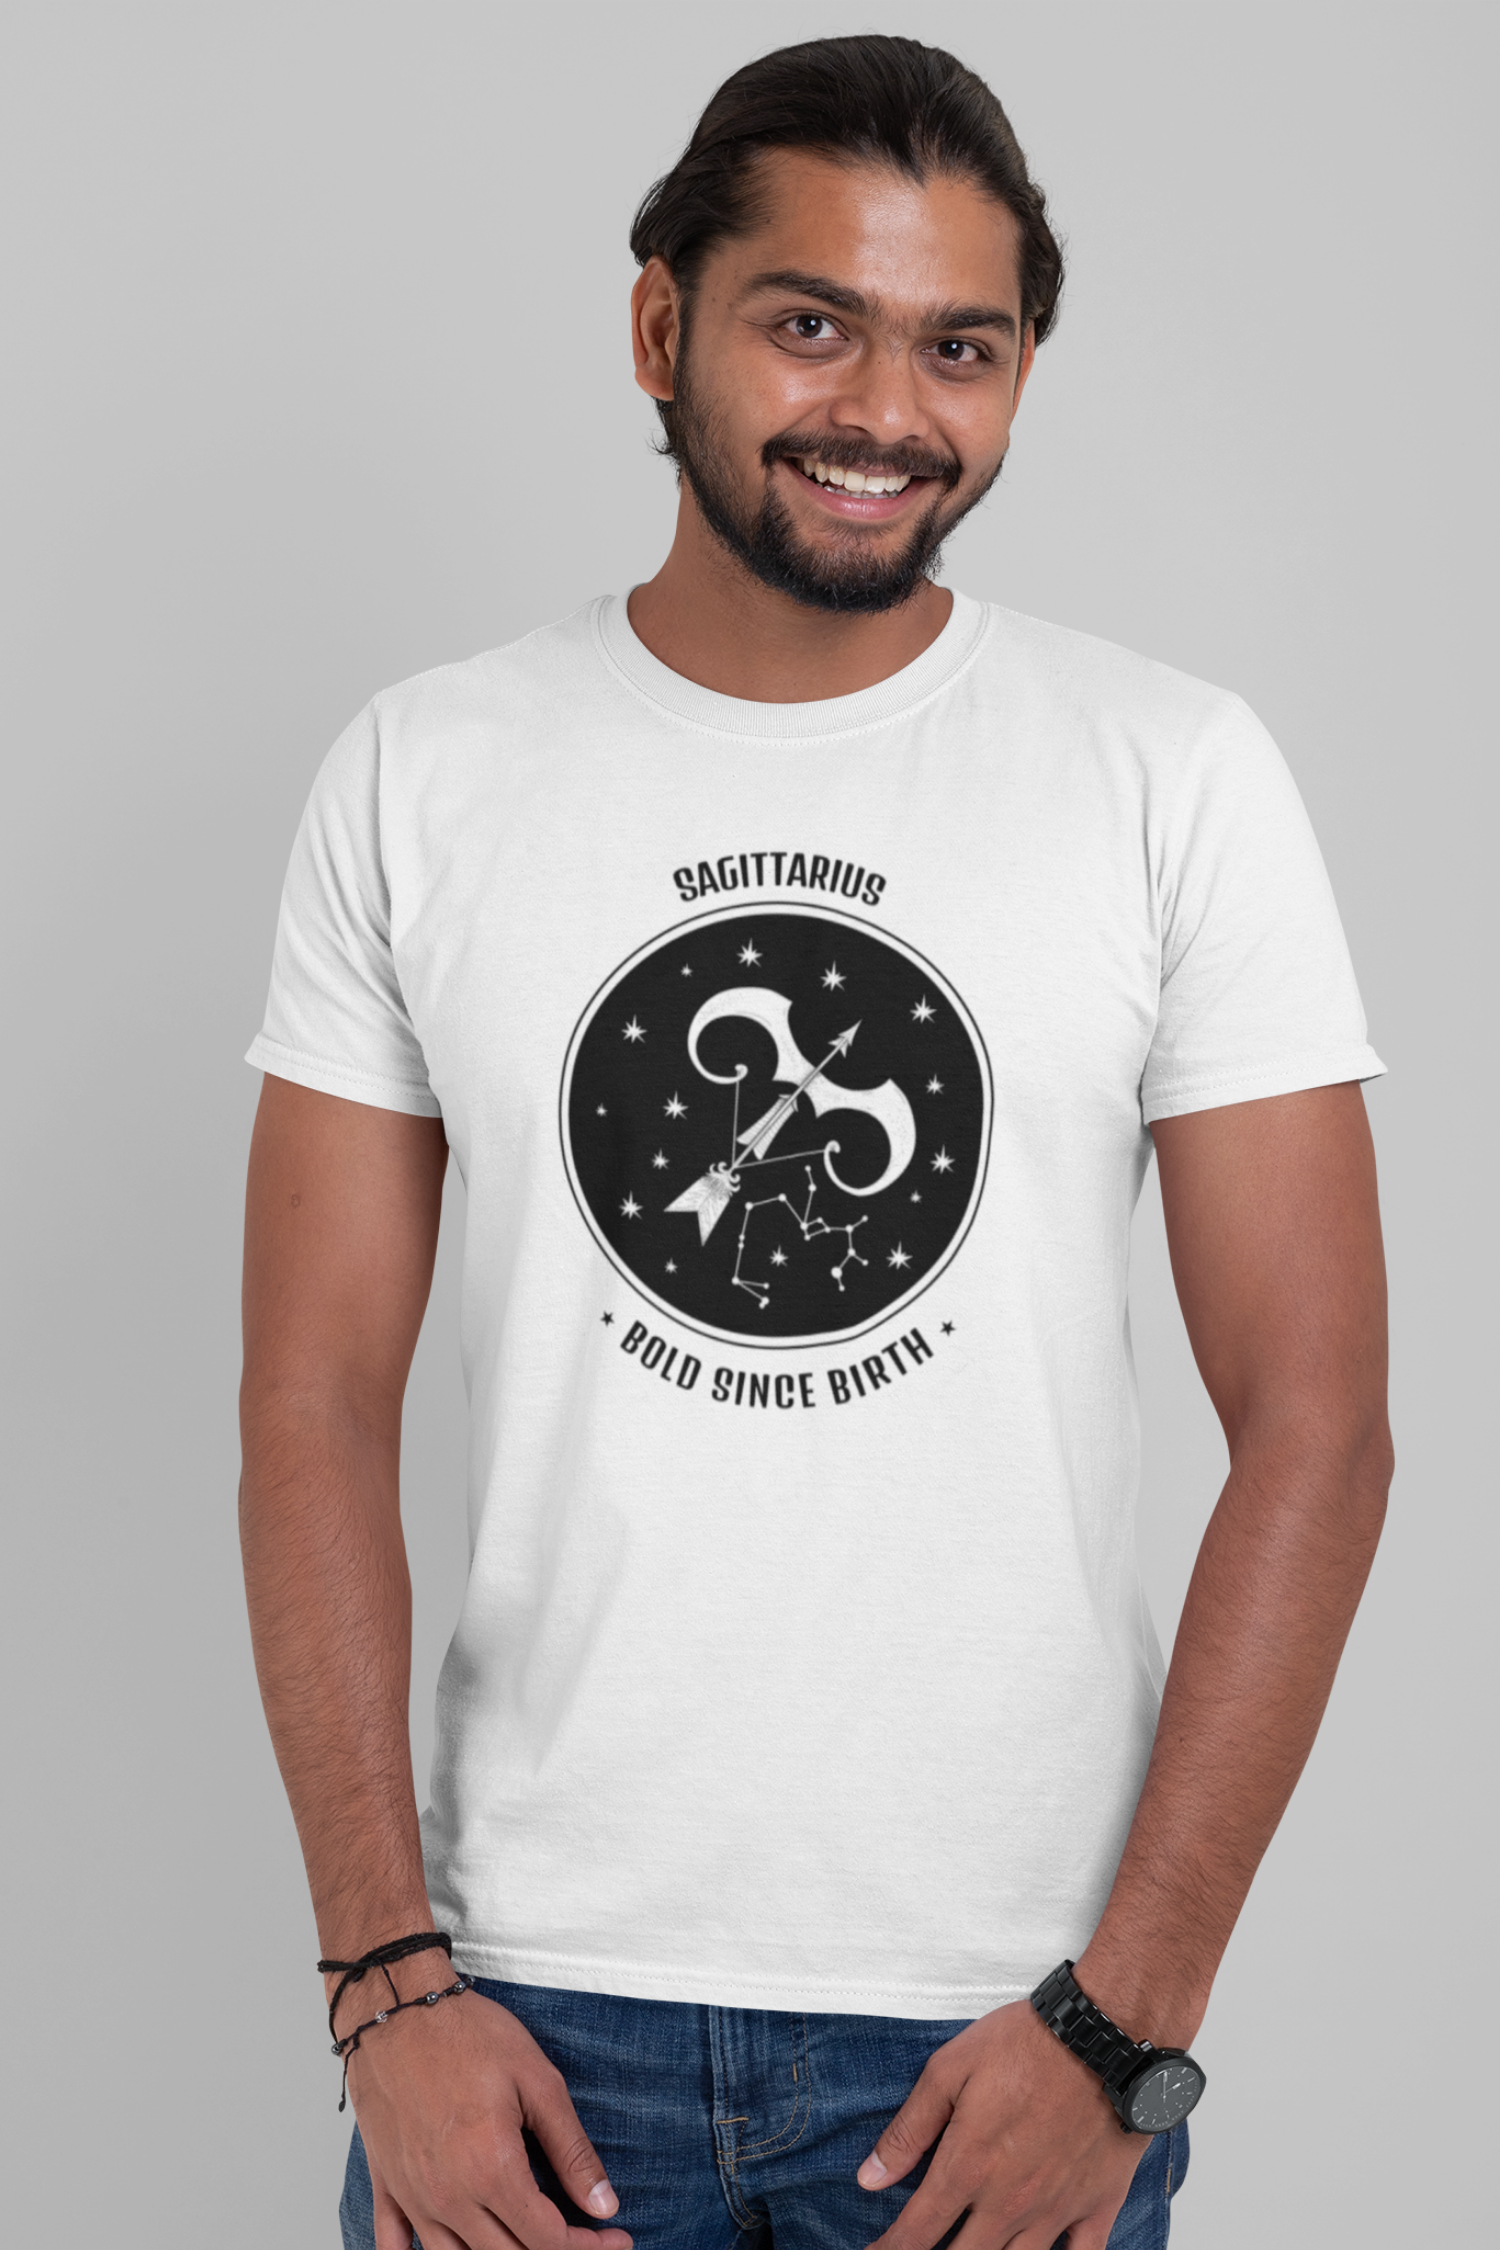 Sagittarius Zodiac Sign Men T-shirt online in India - nautunkee.com